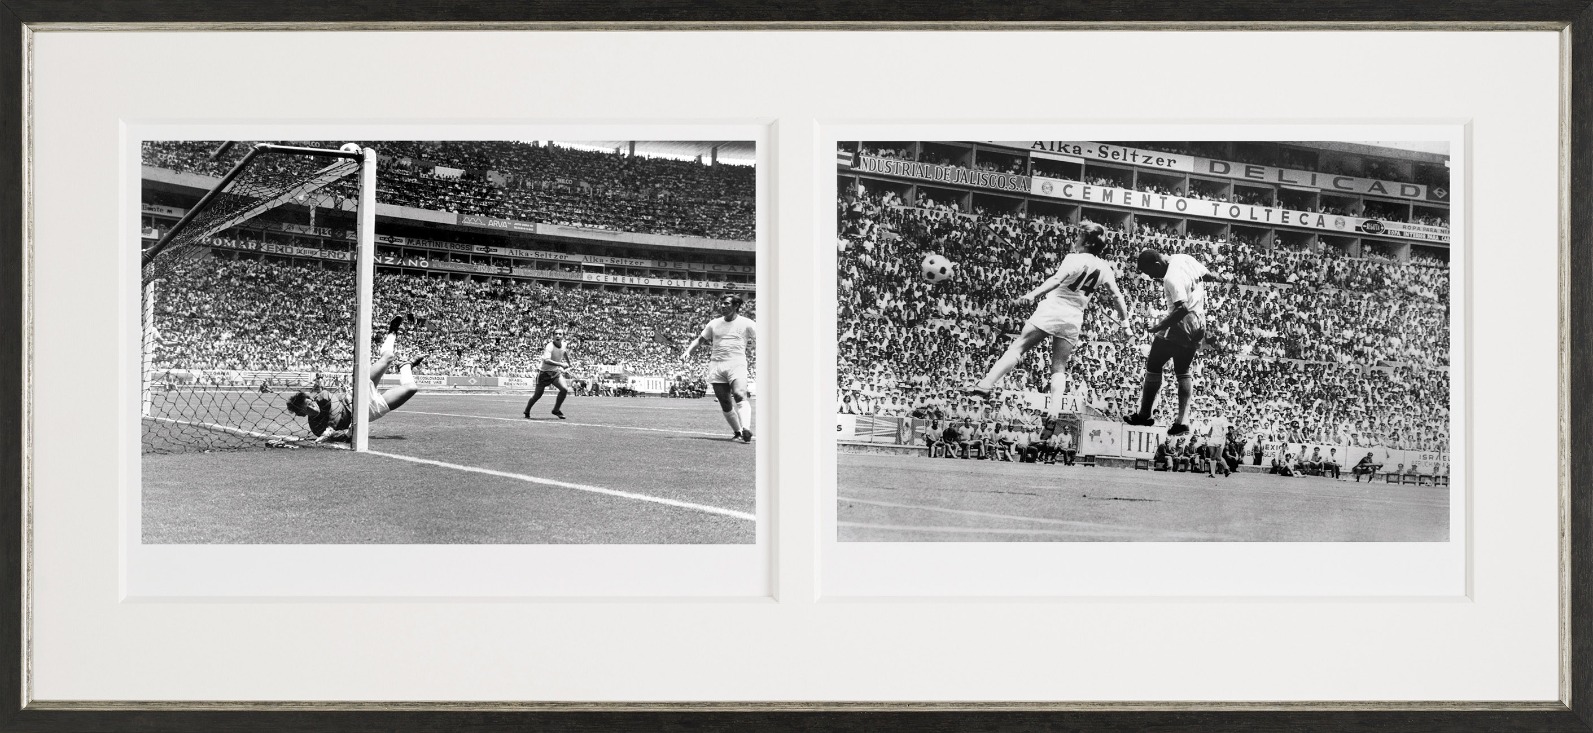 The Greatest Save by Pele, Football | Nostalgic